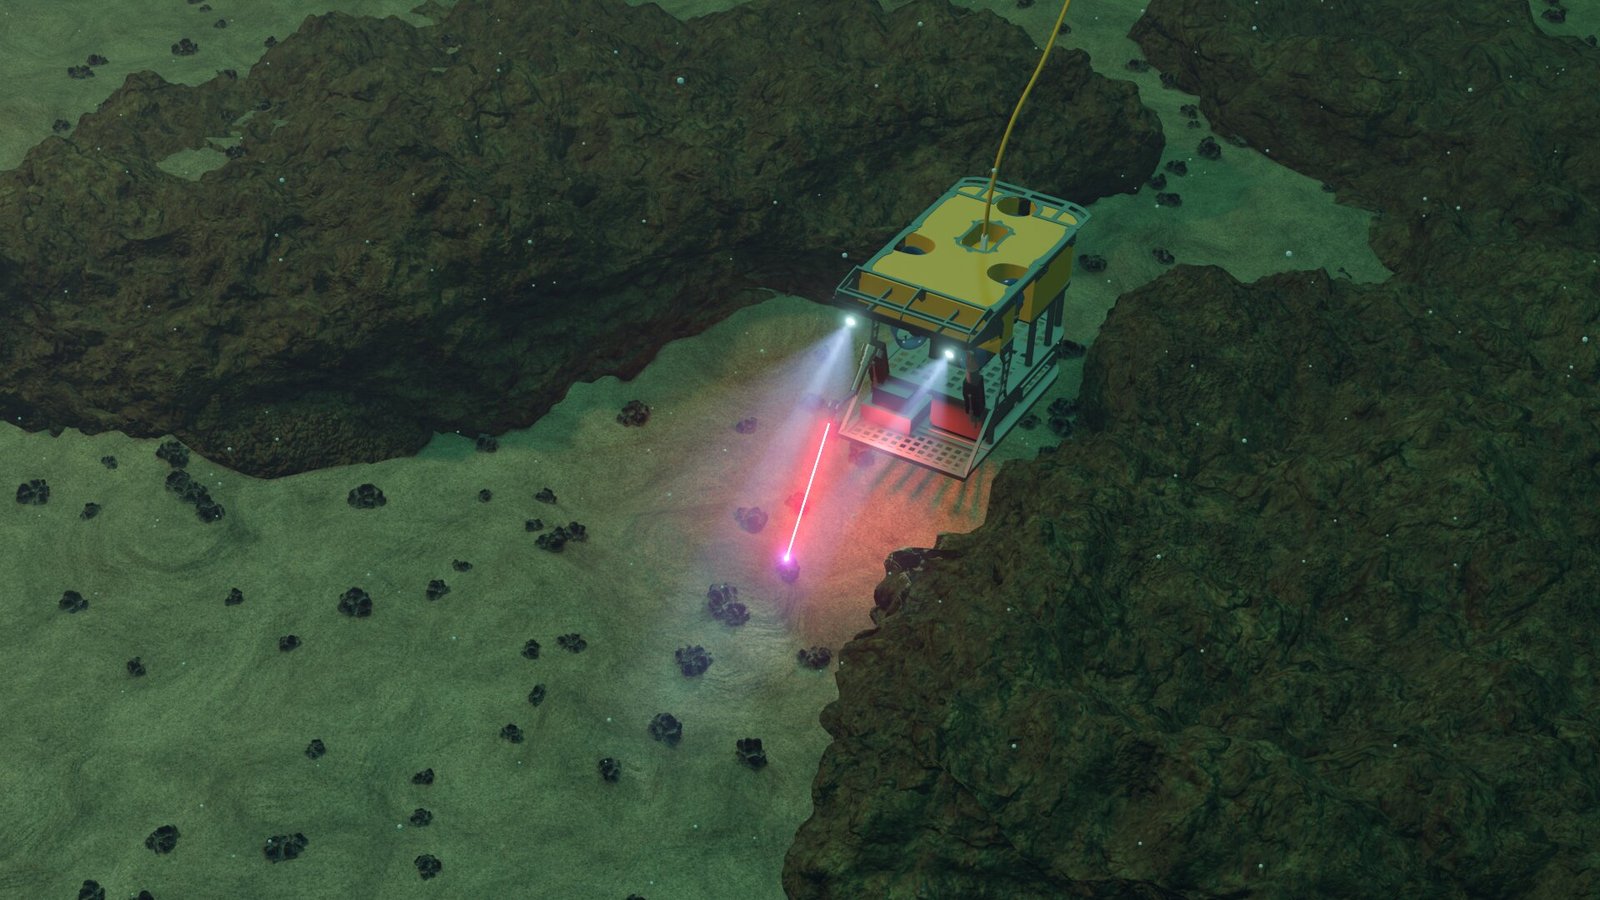 Double pulse LIBS technology provides environmentally friendly analysis of deep sea materials